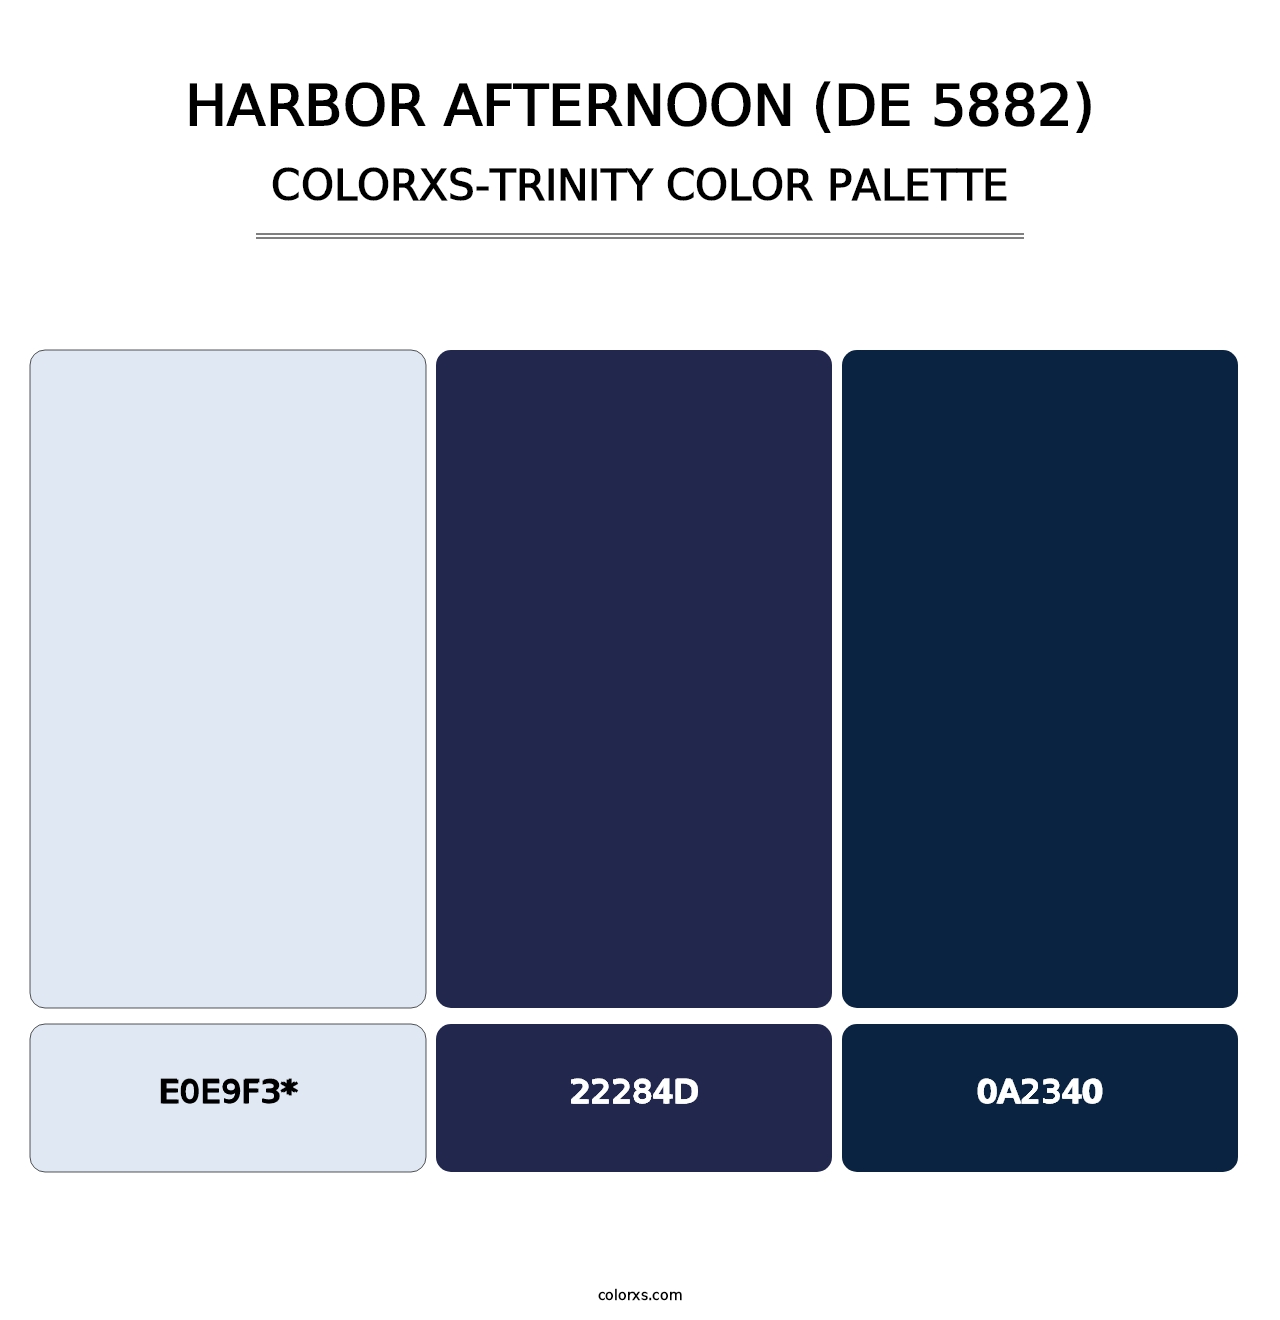 Harbor Afternoon (DE 5882) - Colorxs Trinity Palette